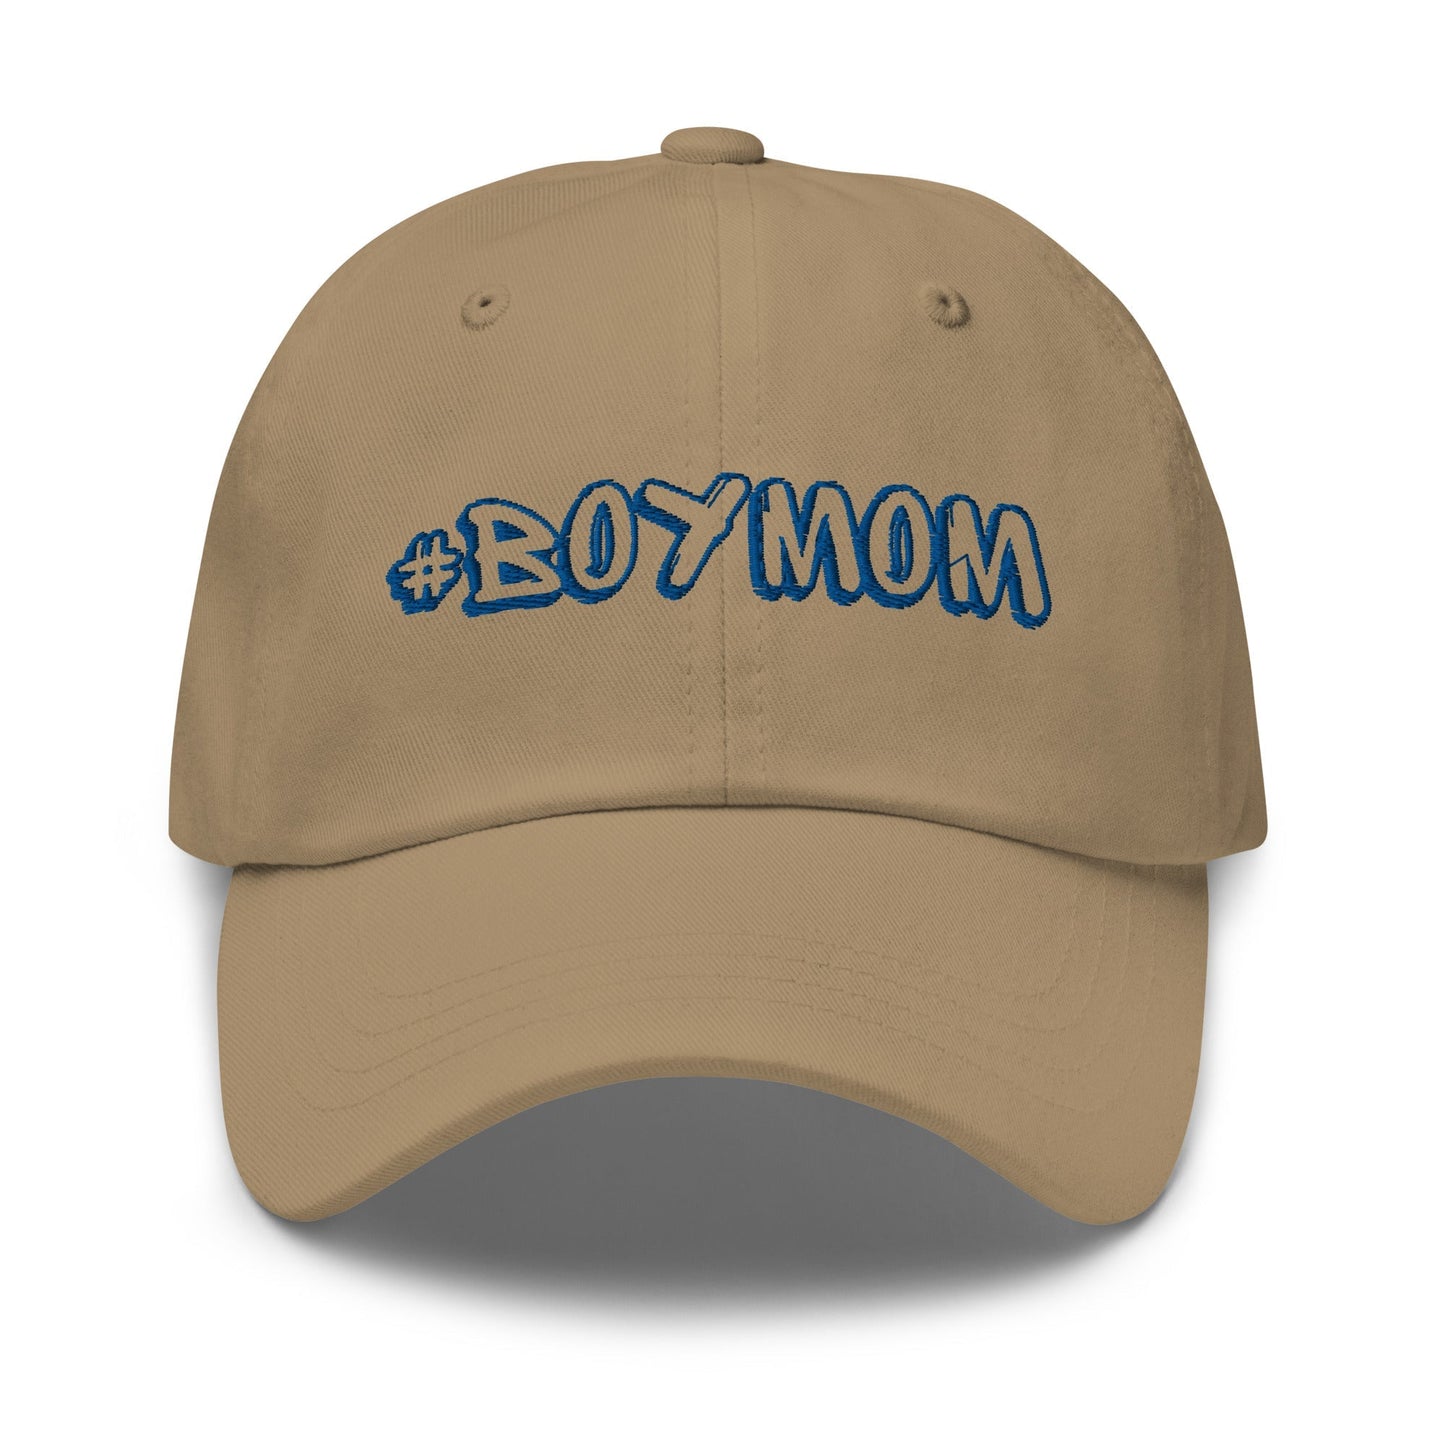 Boy Mom Hat | Shop Hats for Women